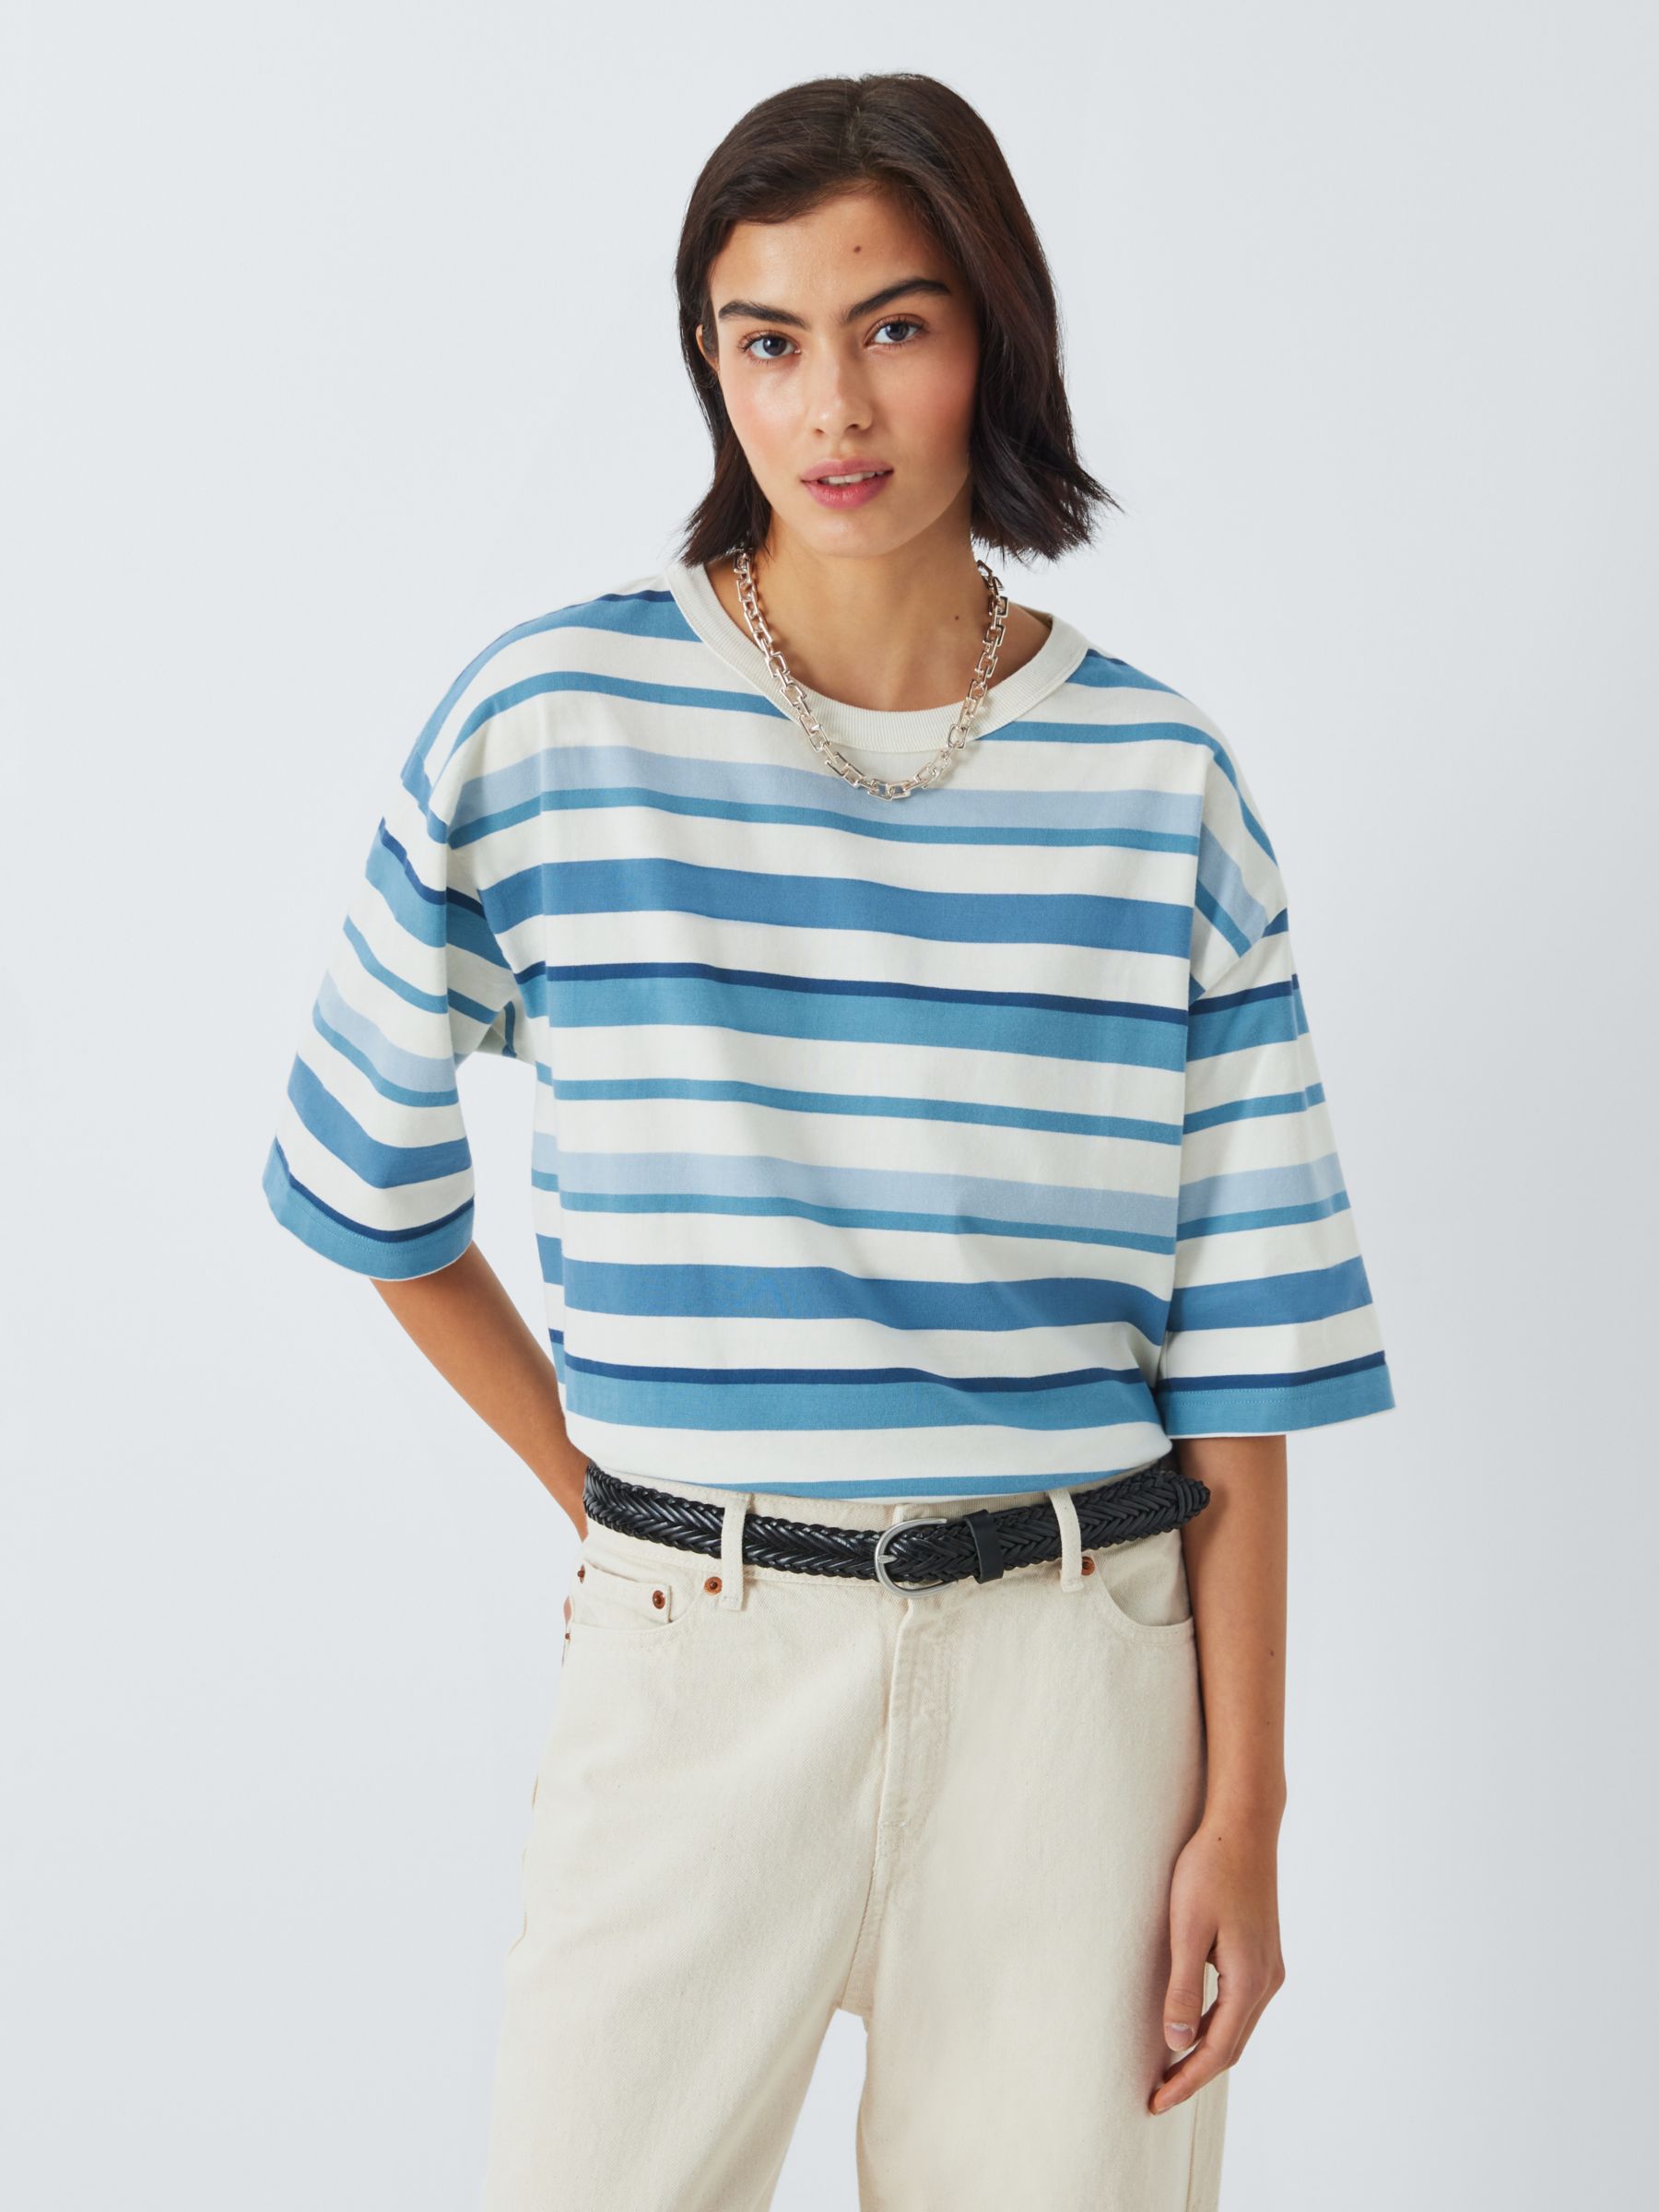 Armor Lux x Denham Comfort Stripe Shirt, White/Blue, L